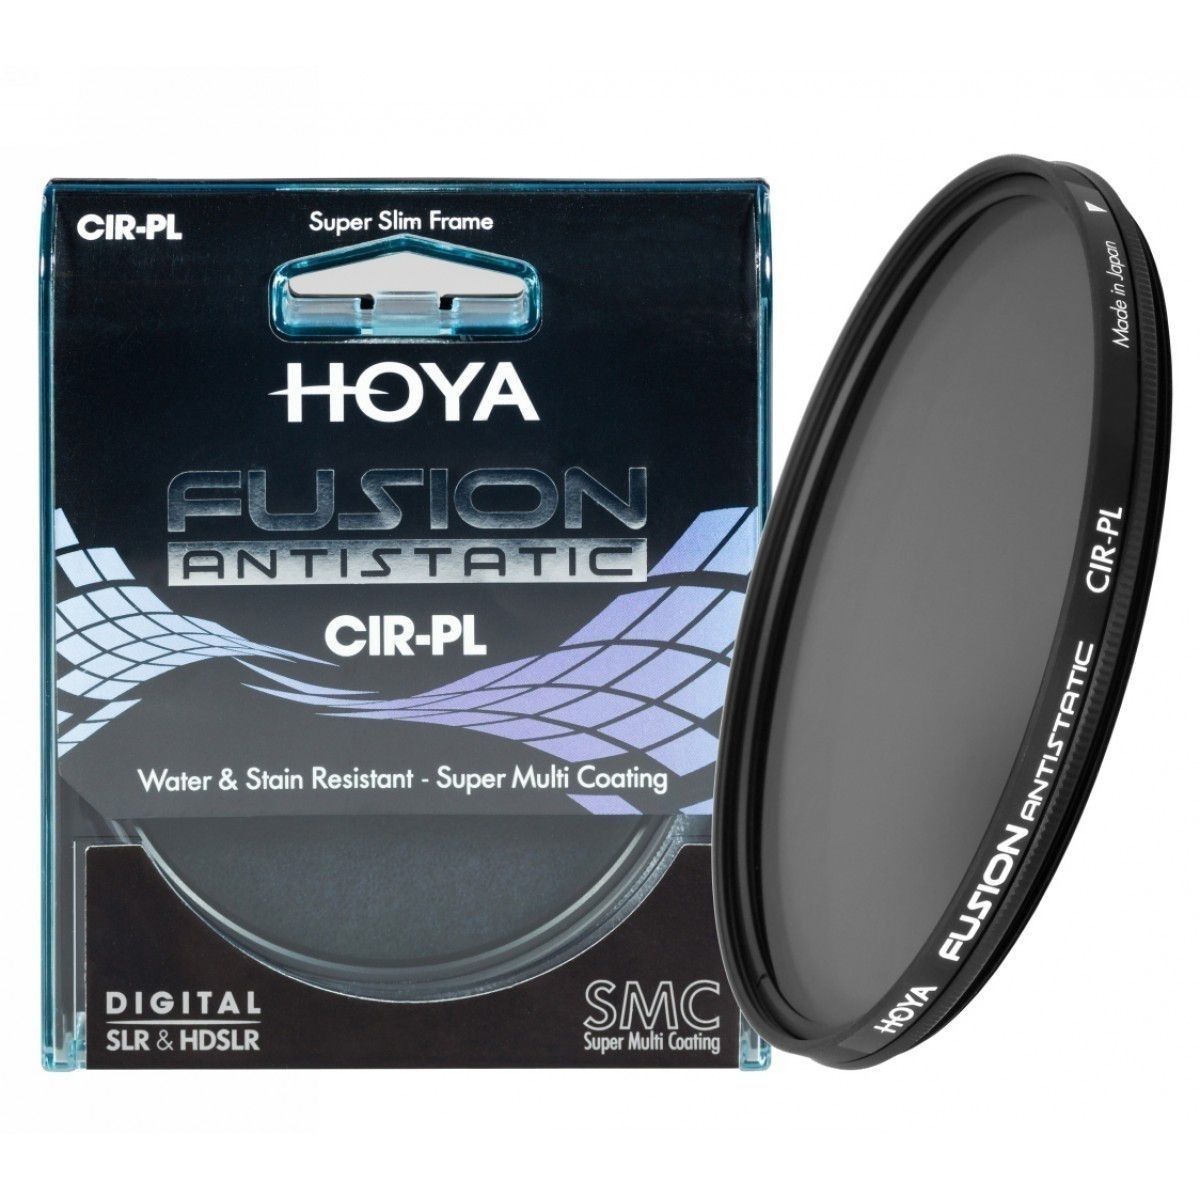 Hoya Fusion C-PL 55mm